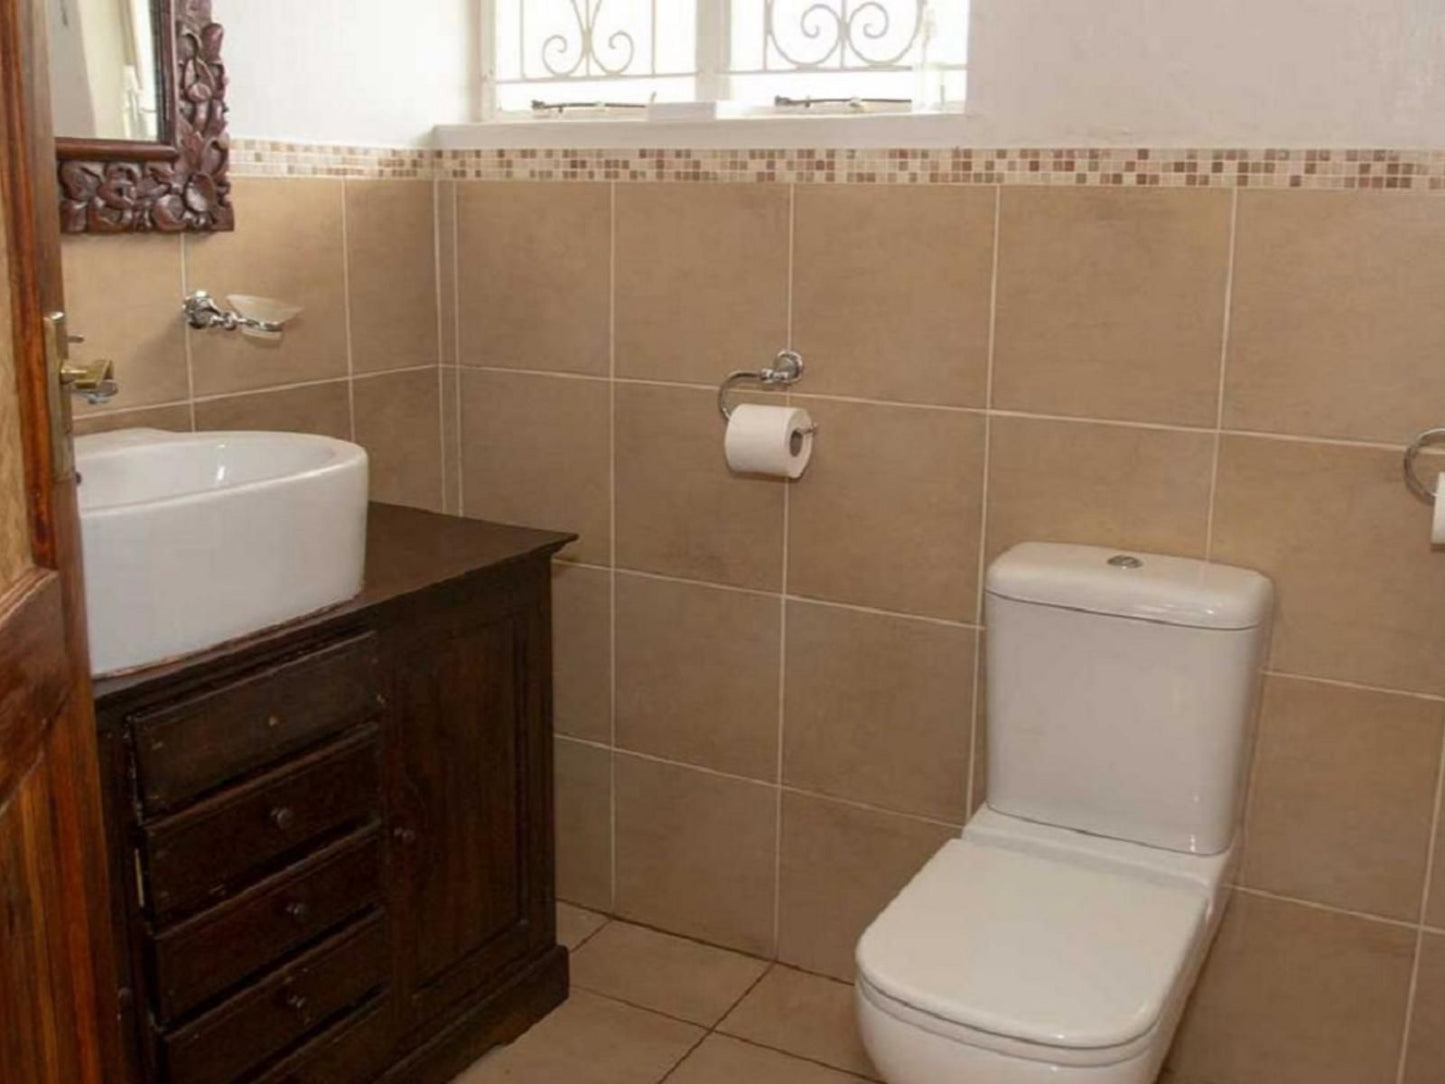 Valley Lodge Hillcrest Hillcrest Durban Kwazulu Natal South Africa Sepia Tones, Bathroom